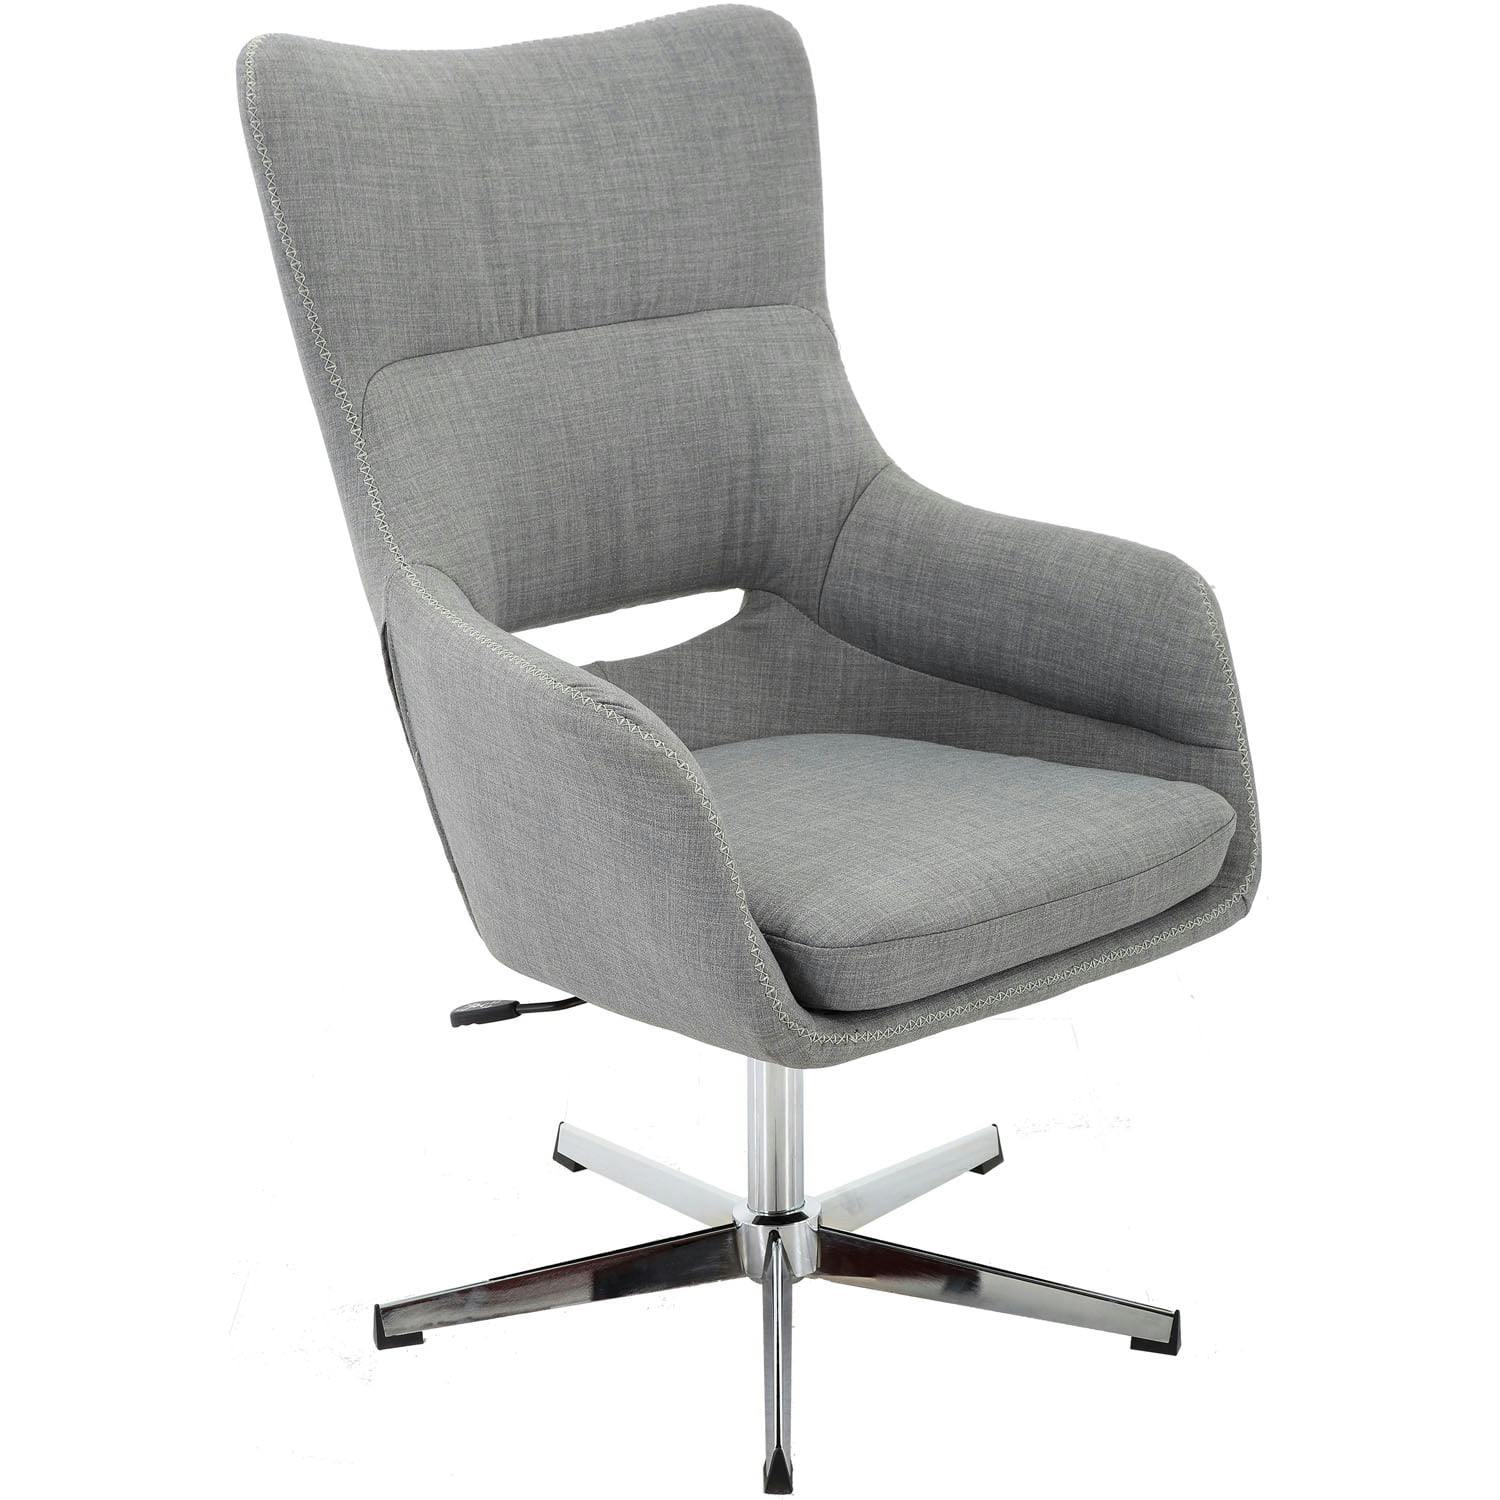 Carlton Executive Gray Leather High-Back Ergonomic Swivel Office Chair